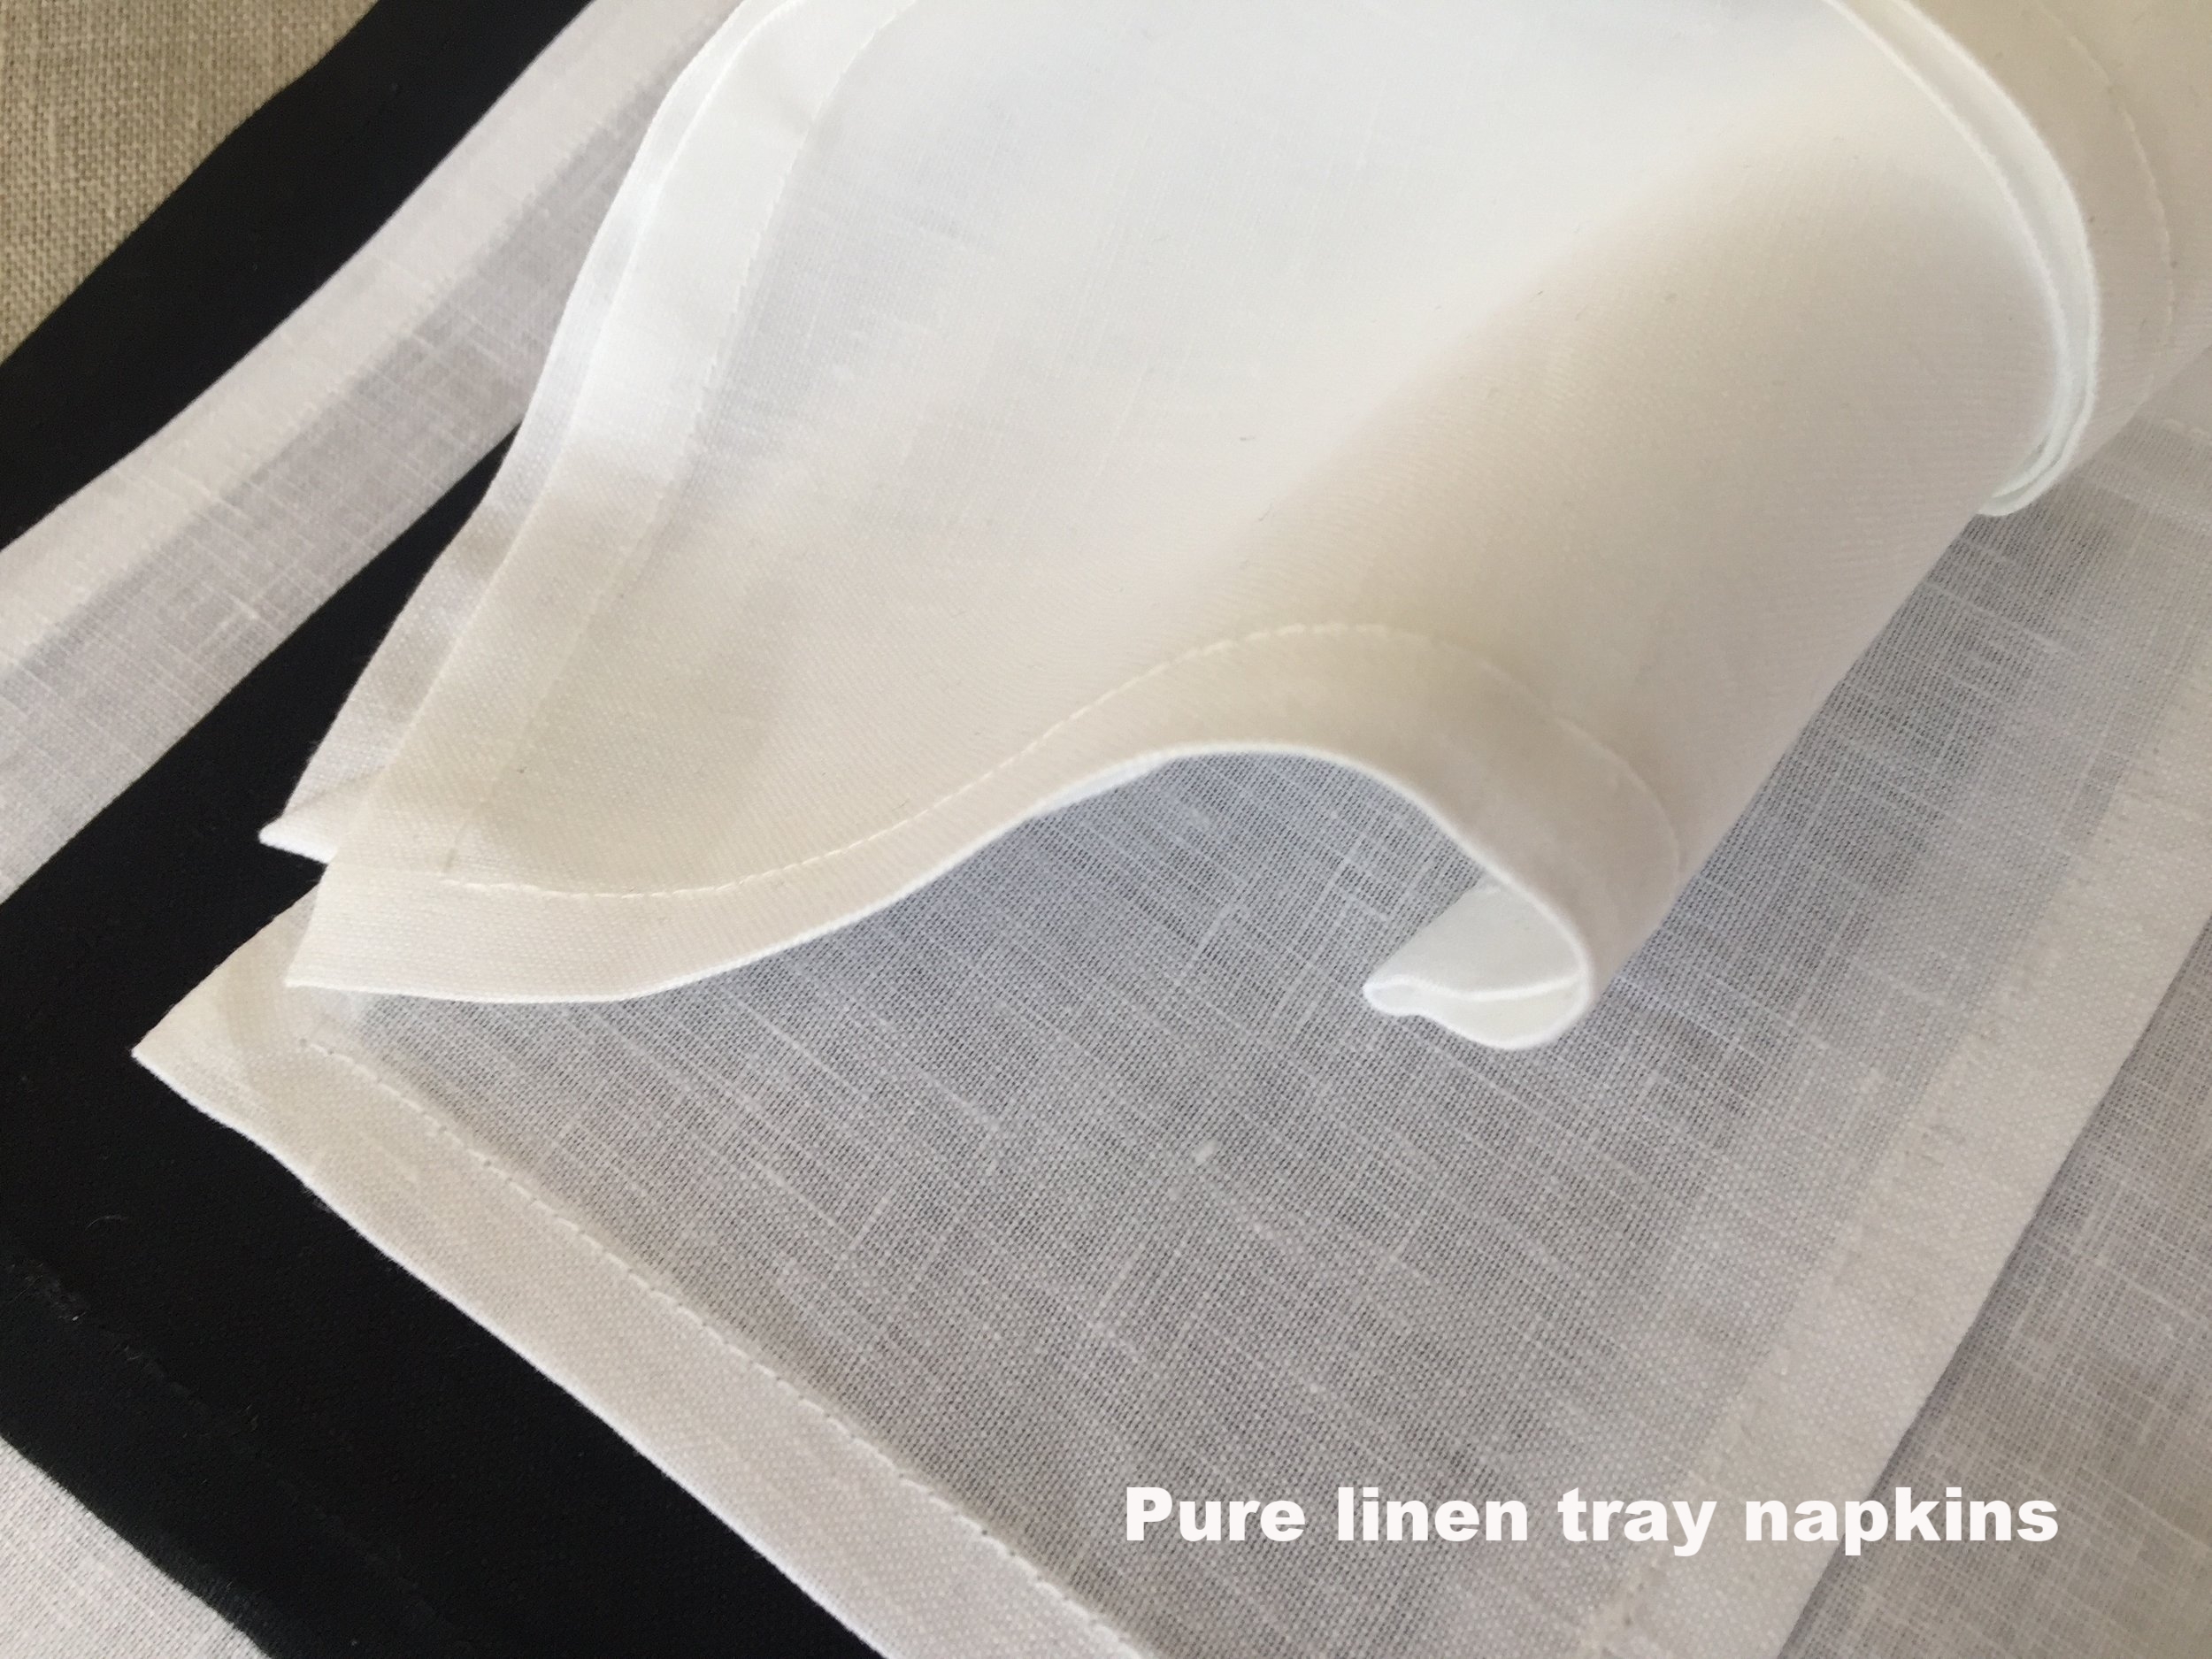 Fine linen tray napkins